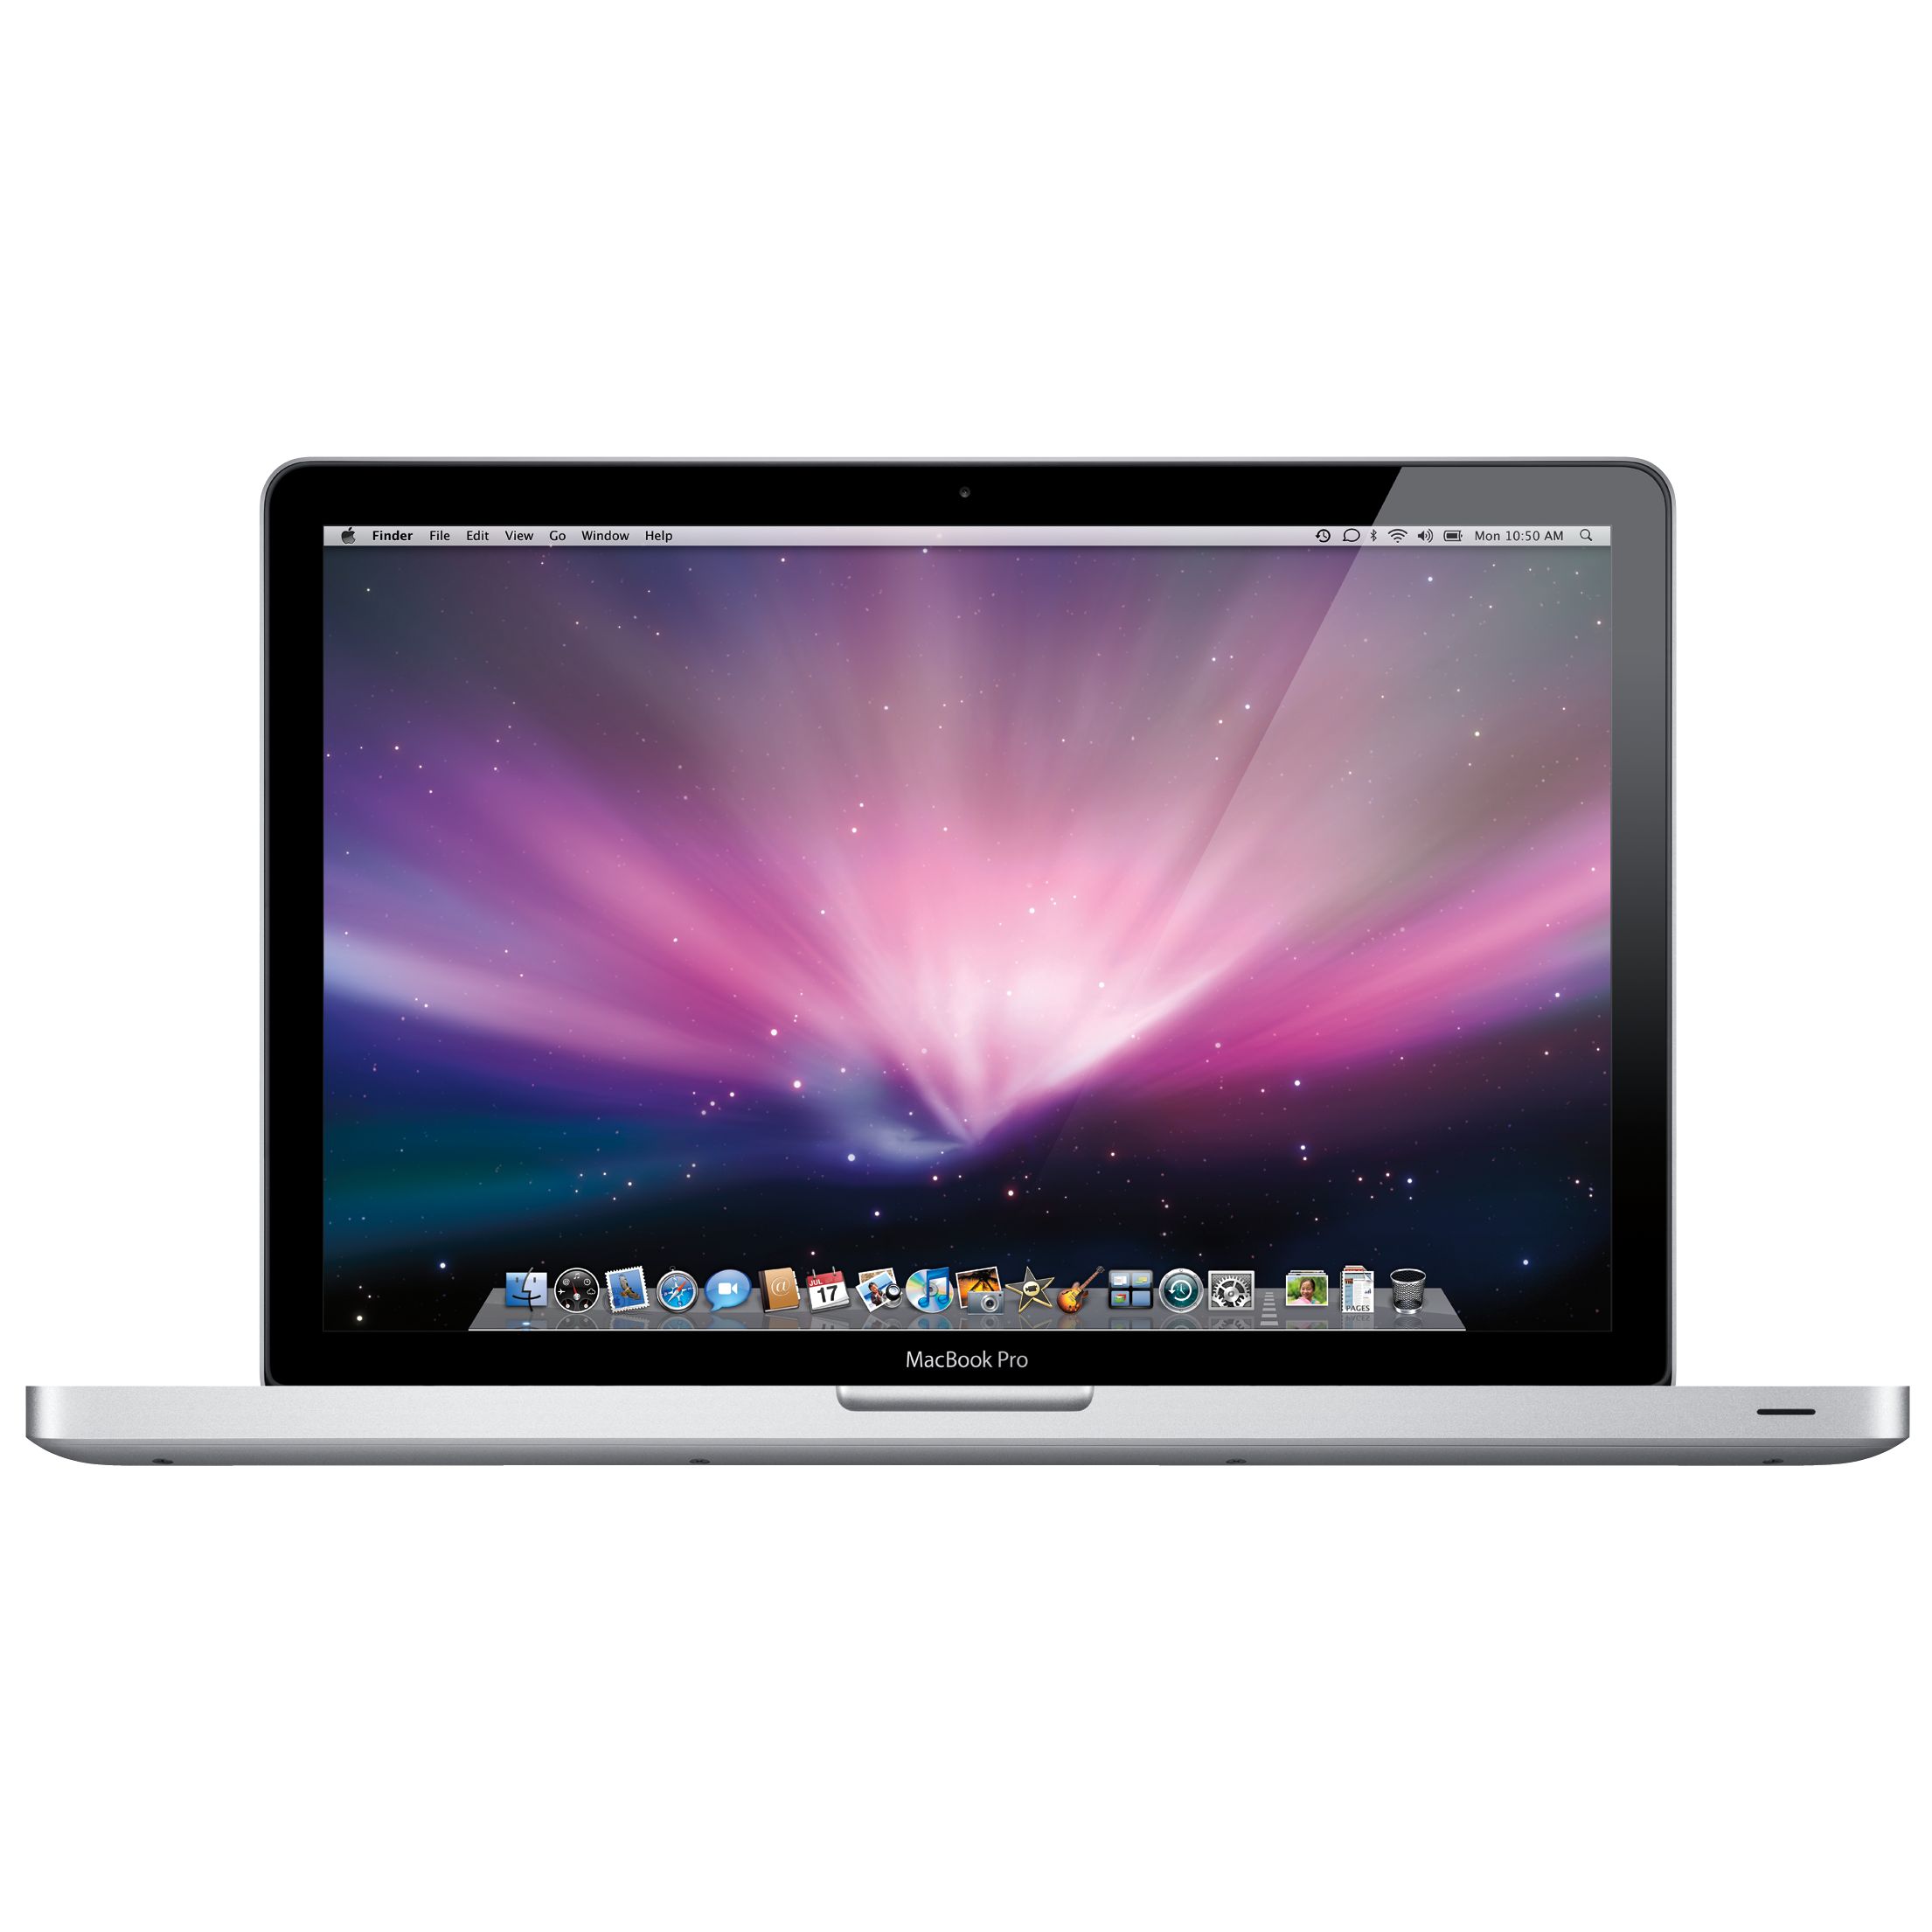 Apple MacBook Pro MC371B/A, Intel Core i5, 320GB, 2.4GHz, 4GB RAM with 15.4 Inch Display at John Lewis